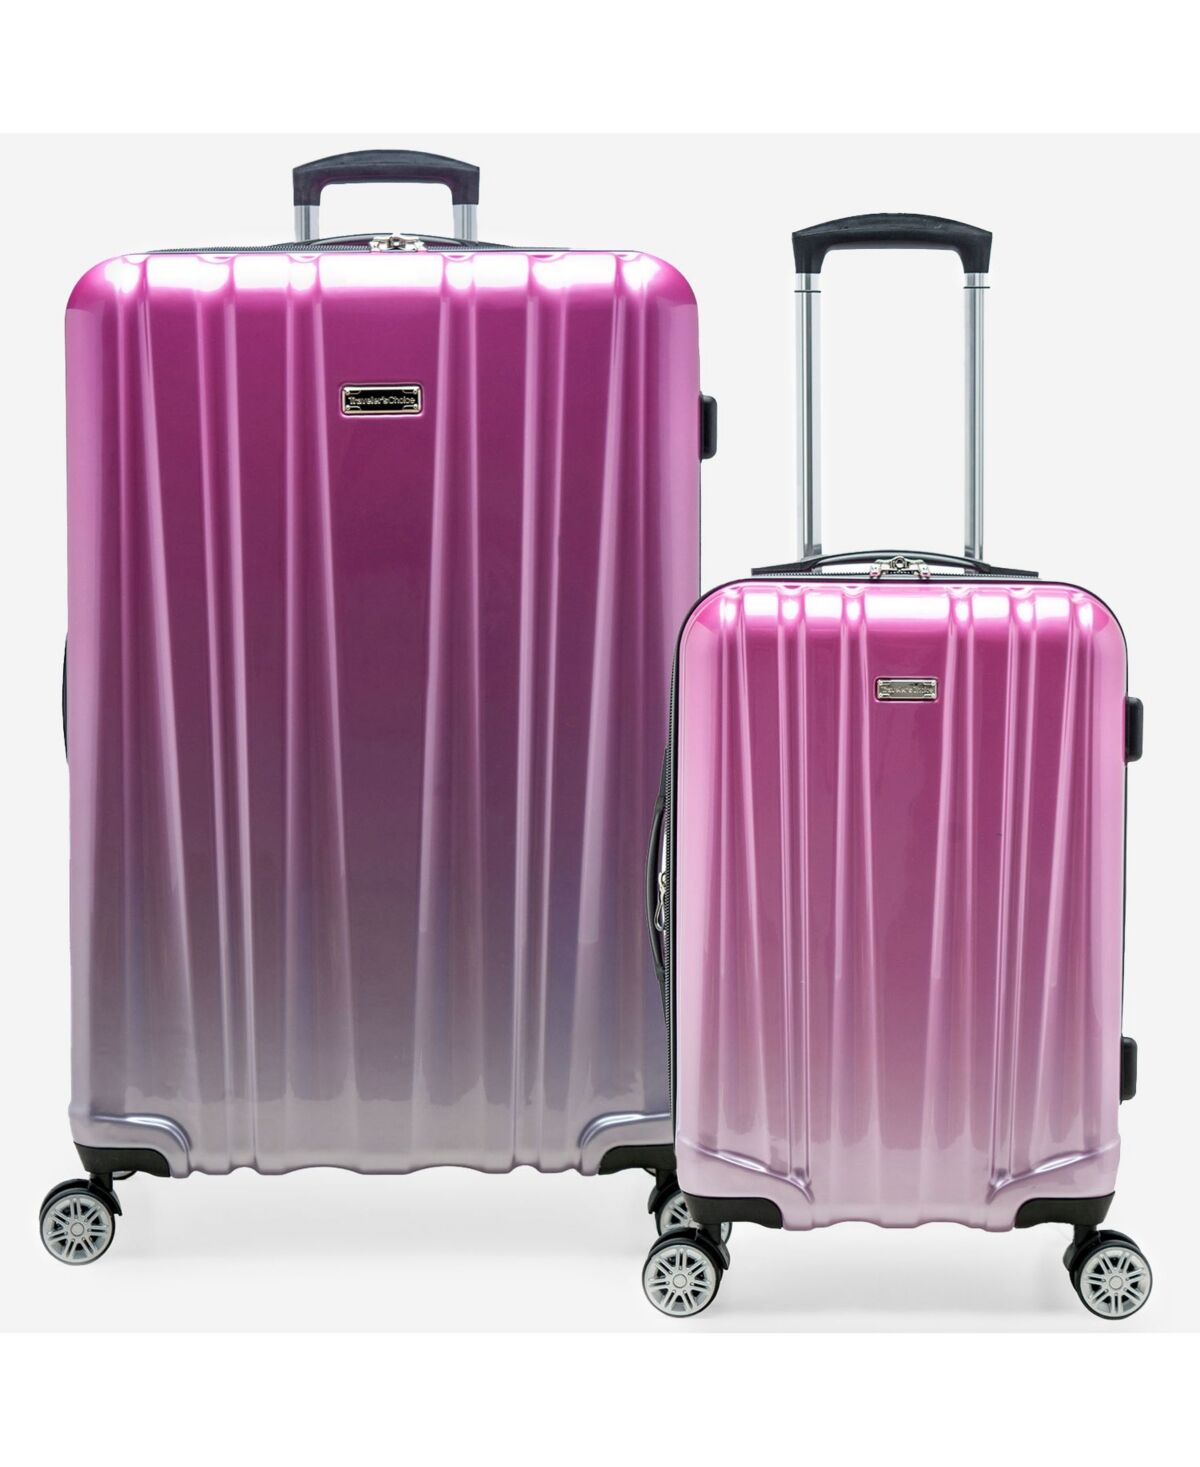 Traveler's Choice Ruma Ii Hardside 2 Piece Luggage Set - Ombre Pink